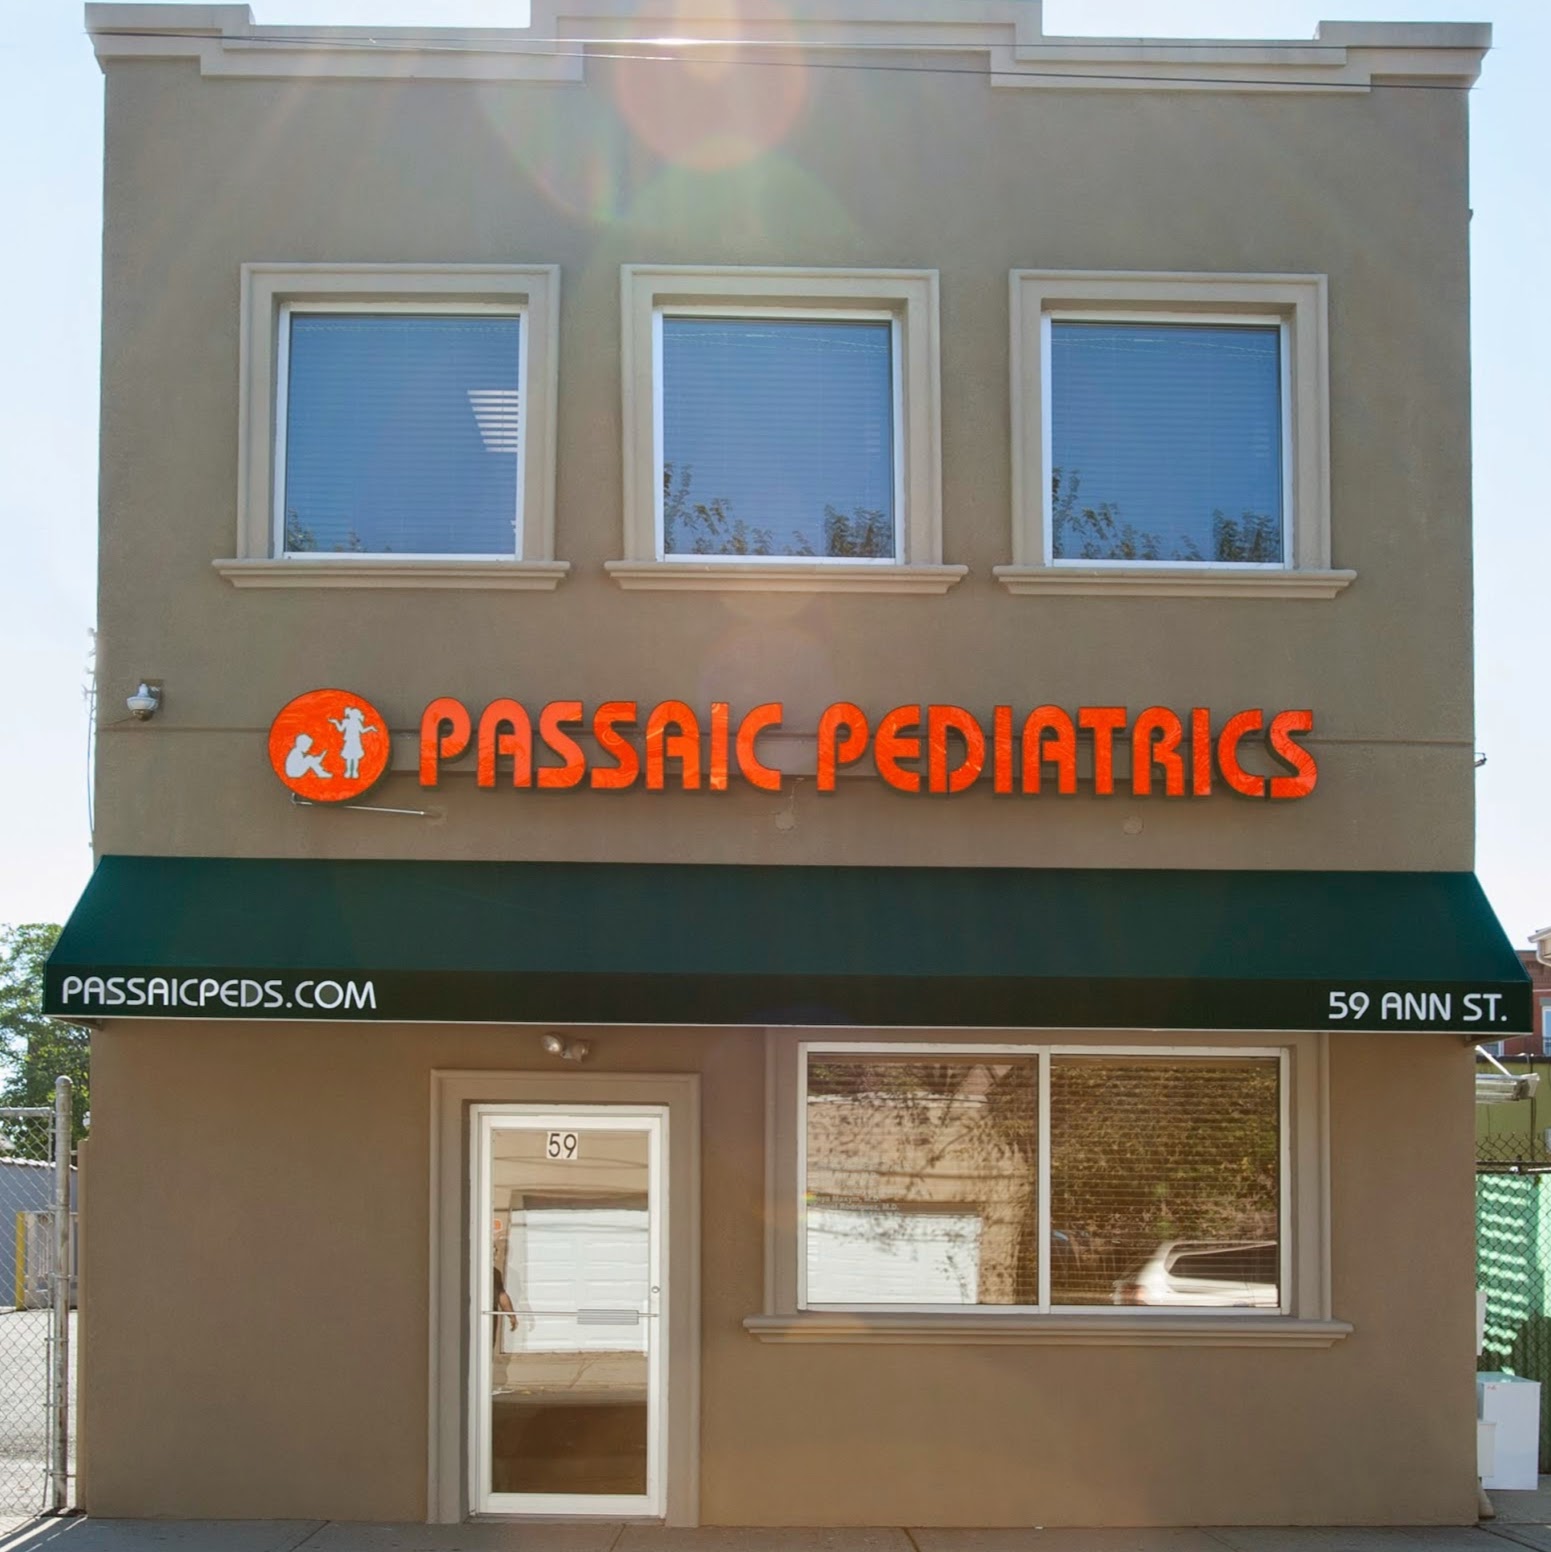 Photo of Passaic Pediatrics in Passaic City, New Jersey, United States - 1 Picture of Point of interest, Establishment, Health, Doctor